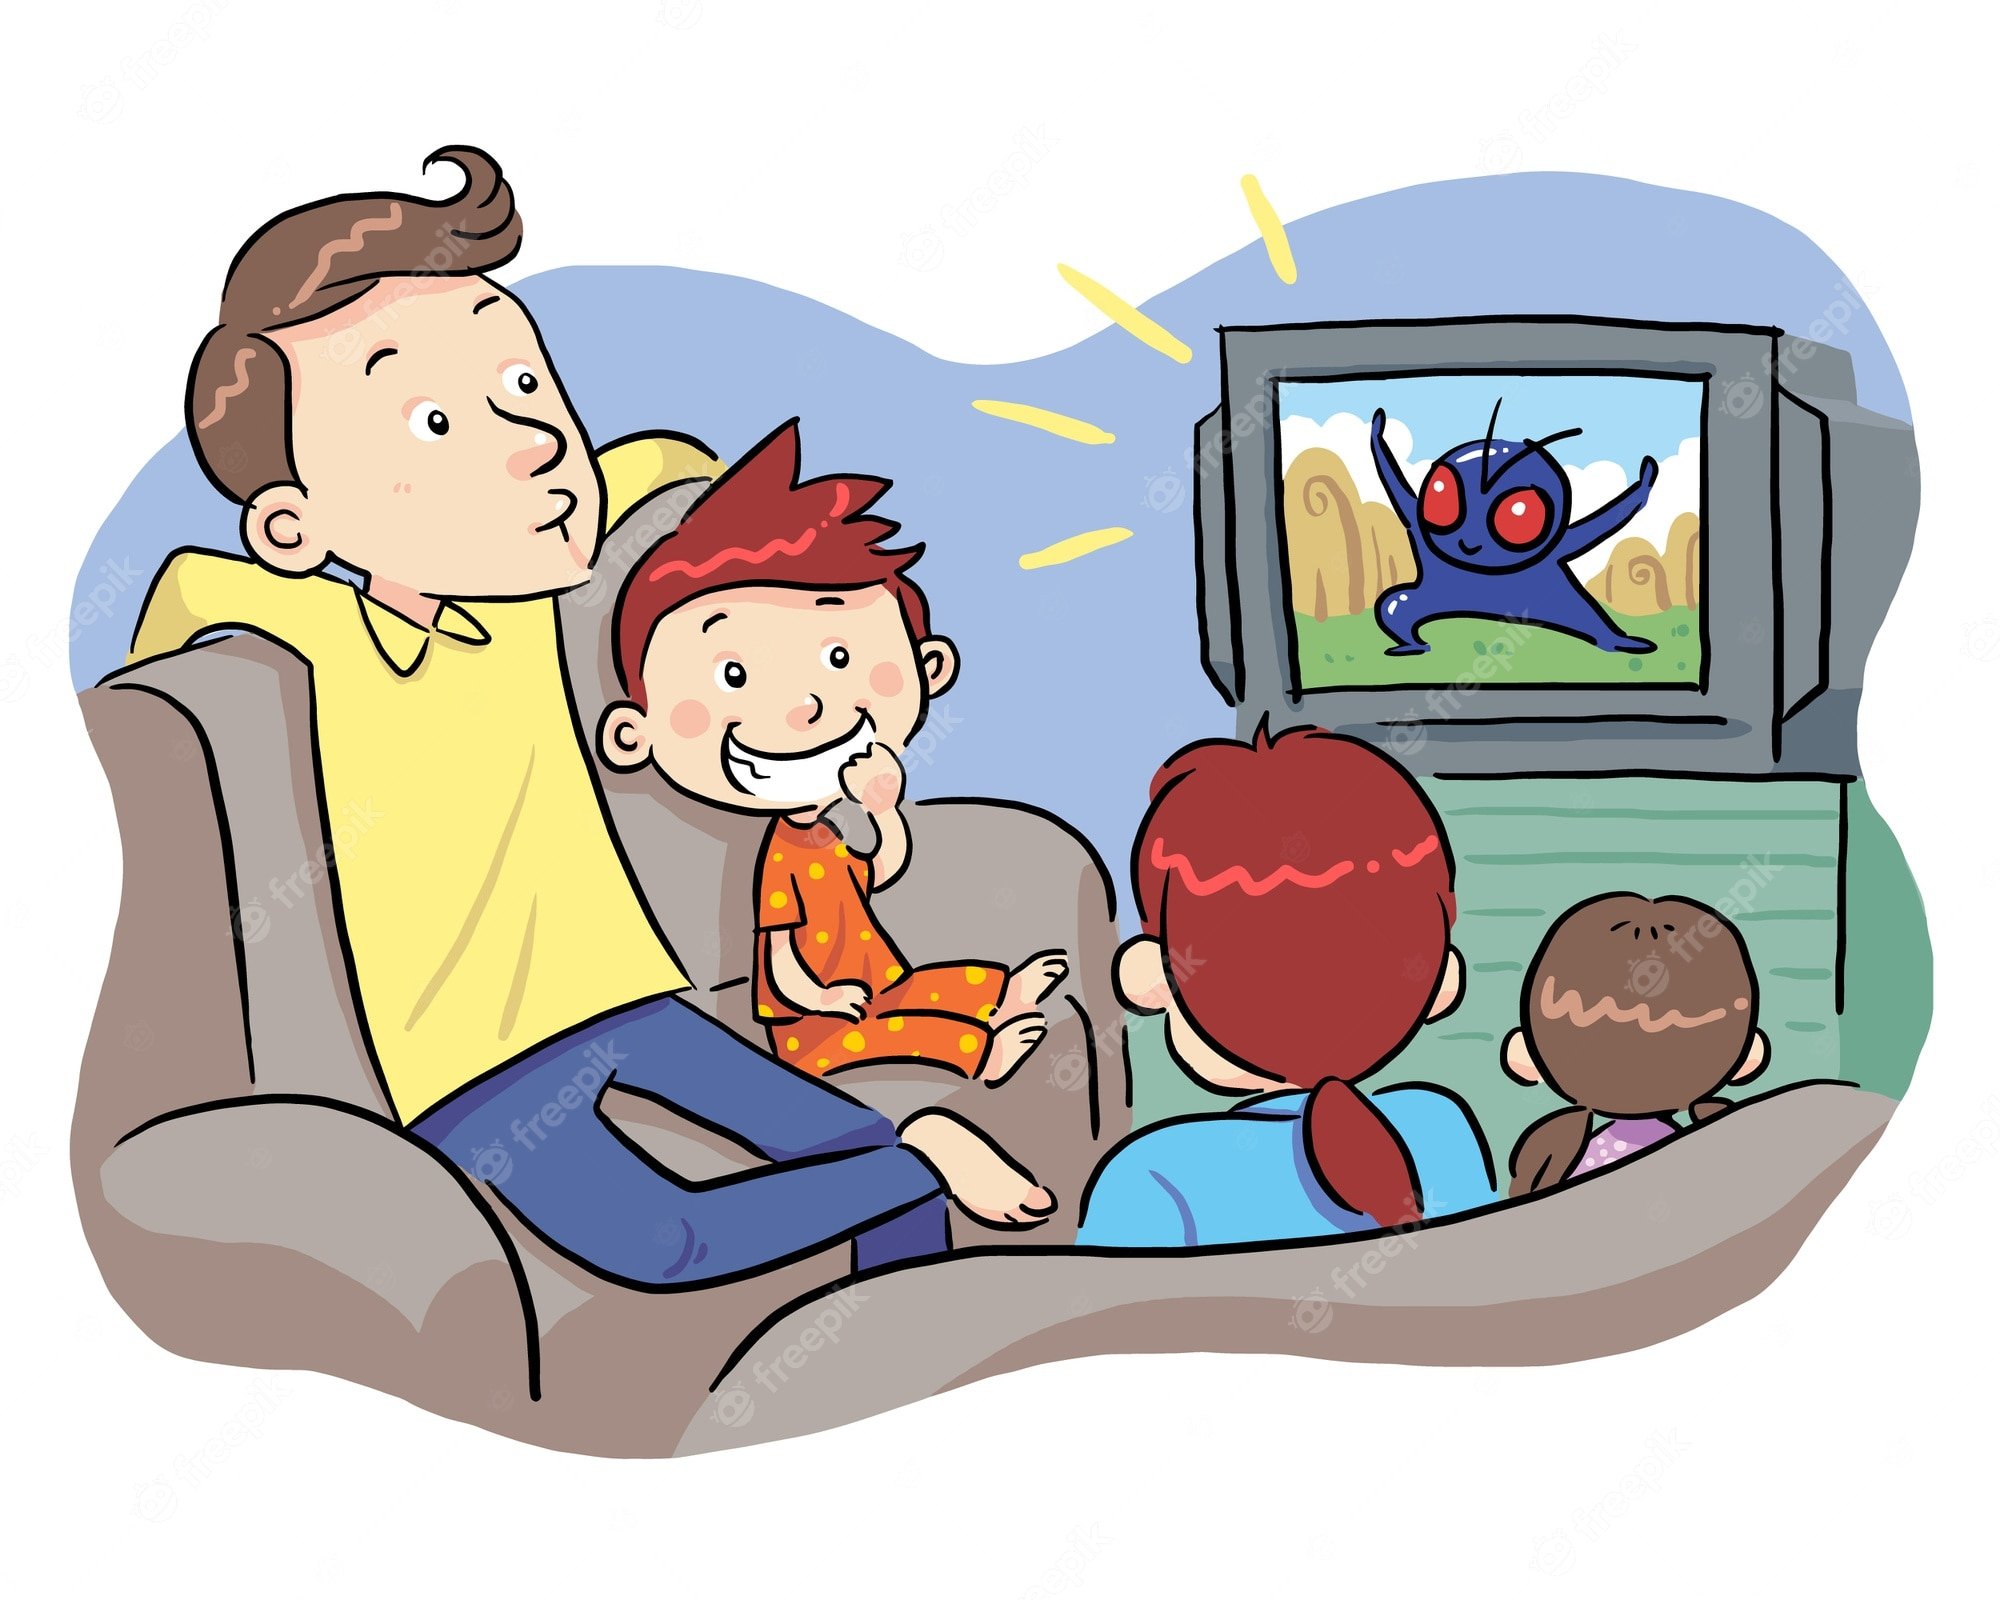 They to watch a new. Телевизор мультяшный. Телевизор для детей cartoon. Телевизор для детей векторное изображение. Родители дети телевизор.